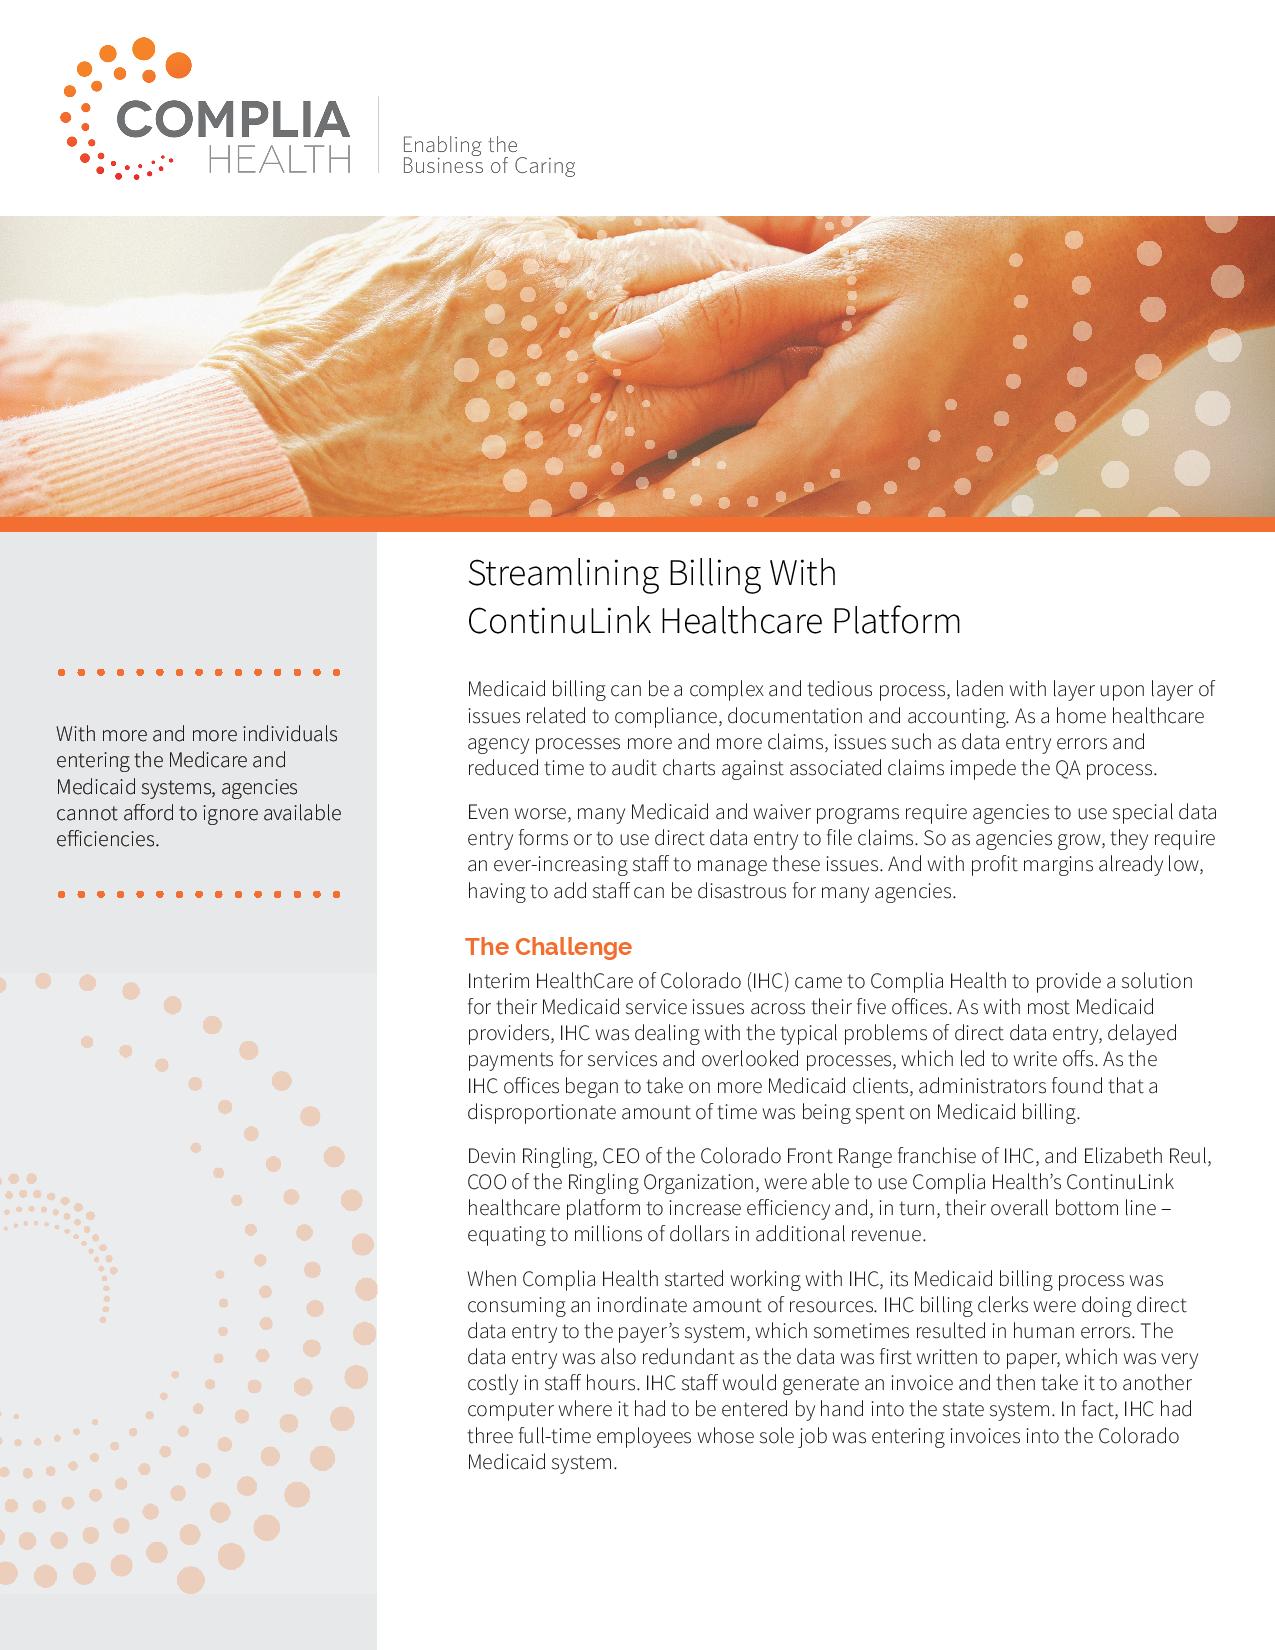 Streamlining Billing with Continulink Healthcare Platform-page-001.jpg